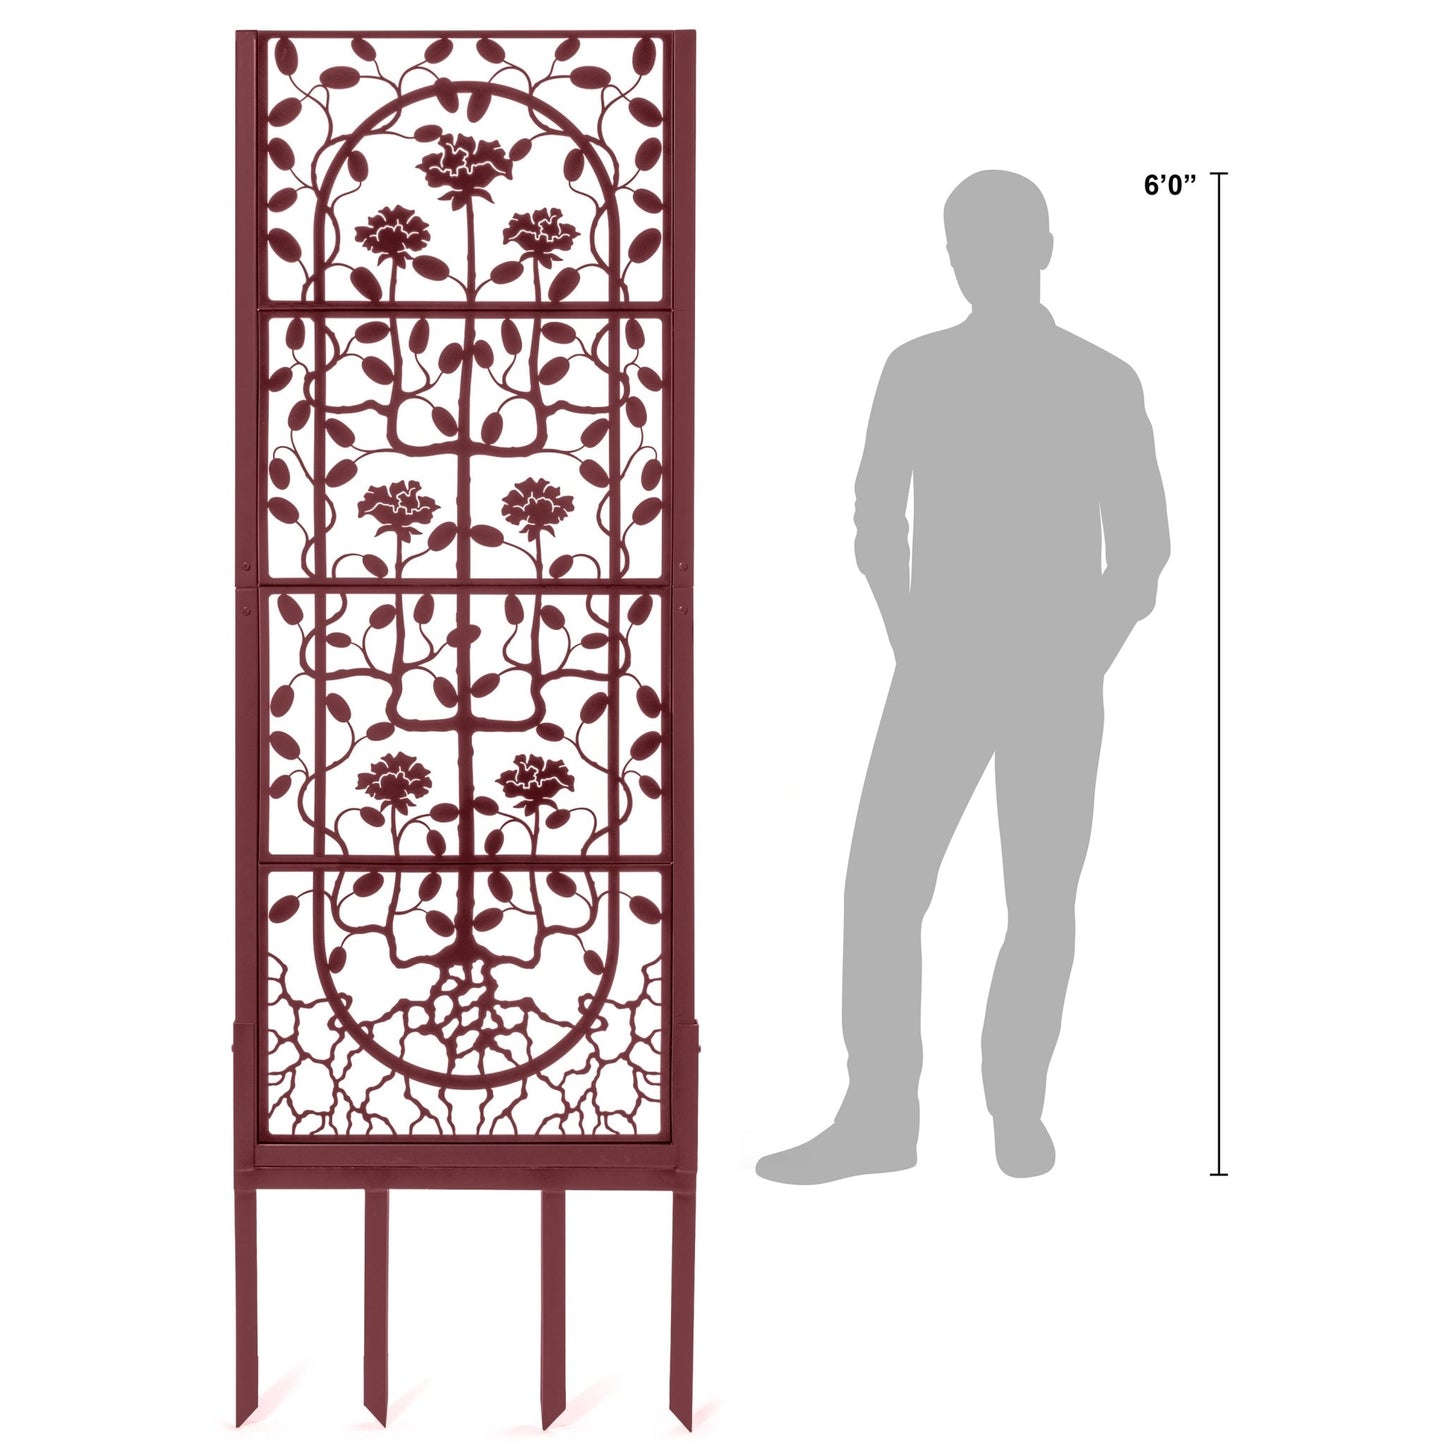 H Potter Garden Trellis: Outdoor Privacy Screen for Climbing Plants - Decorative Metal Panel